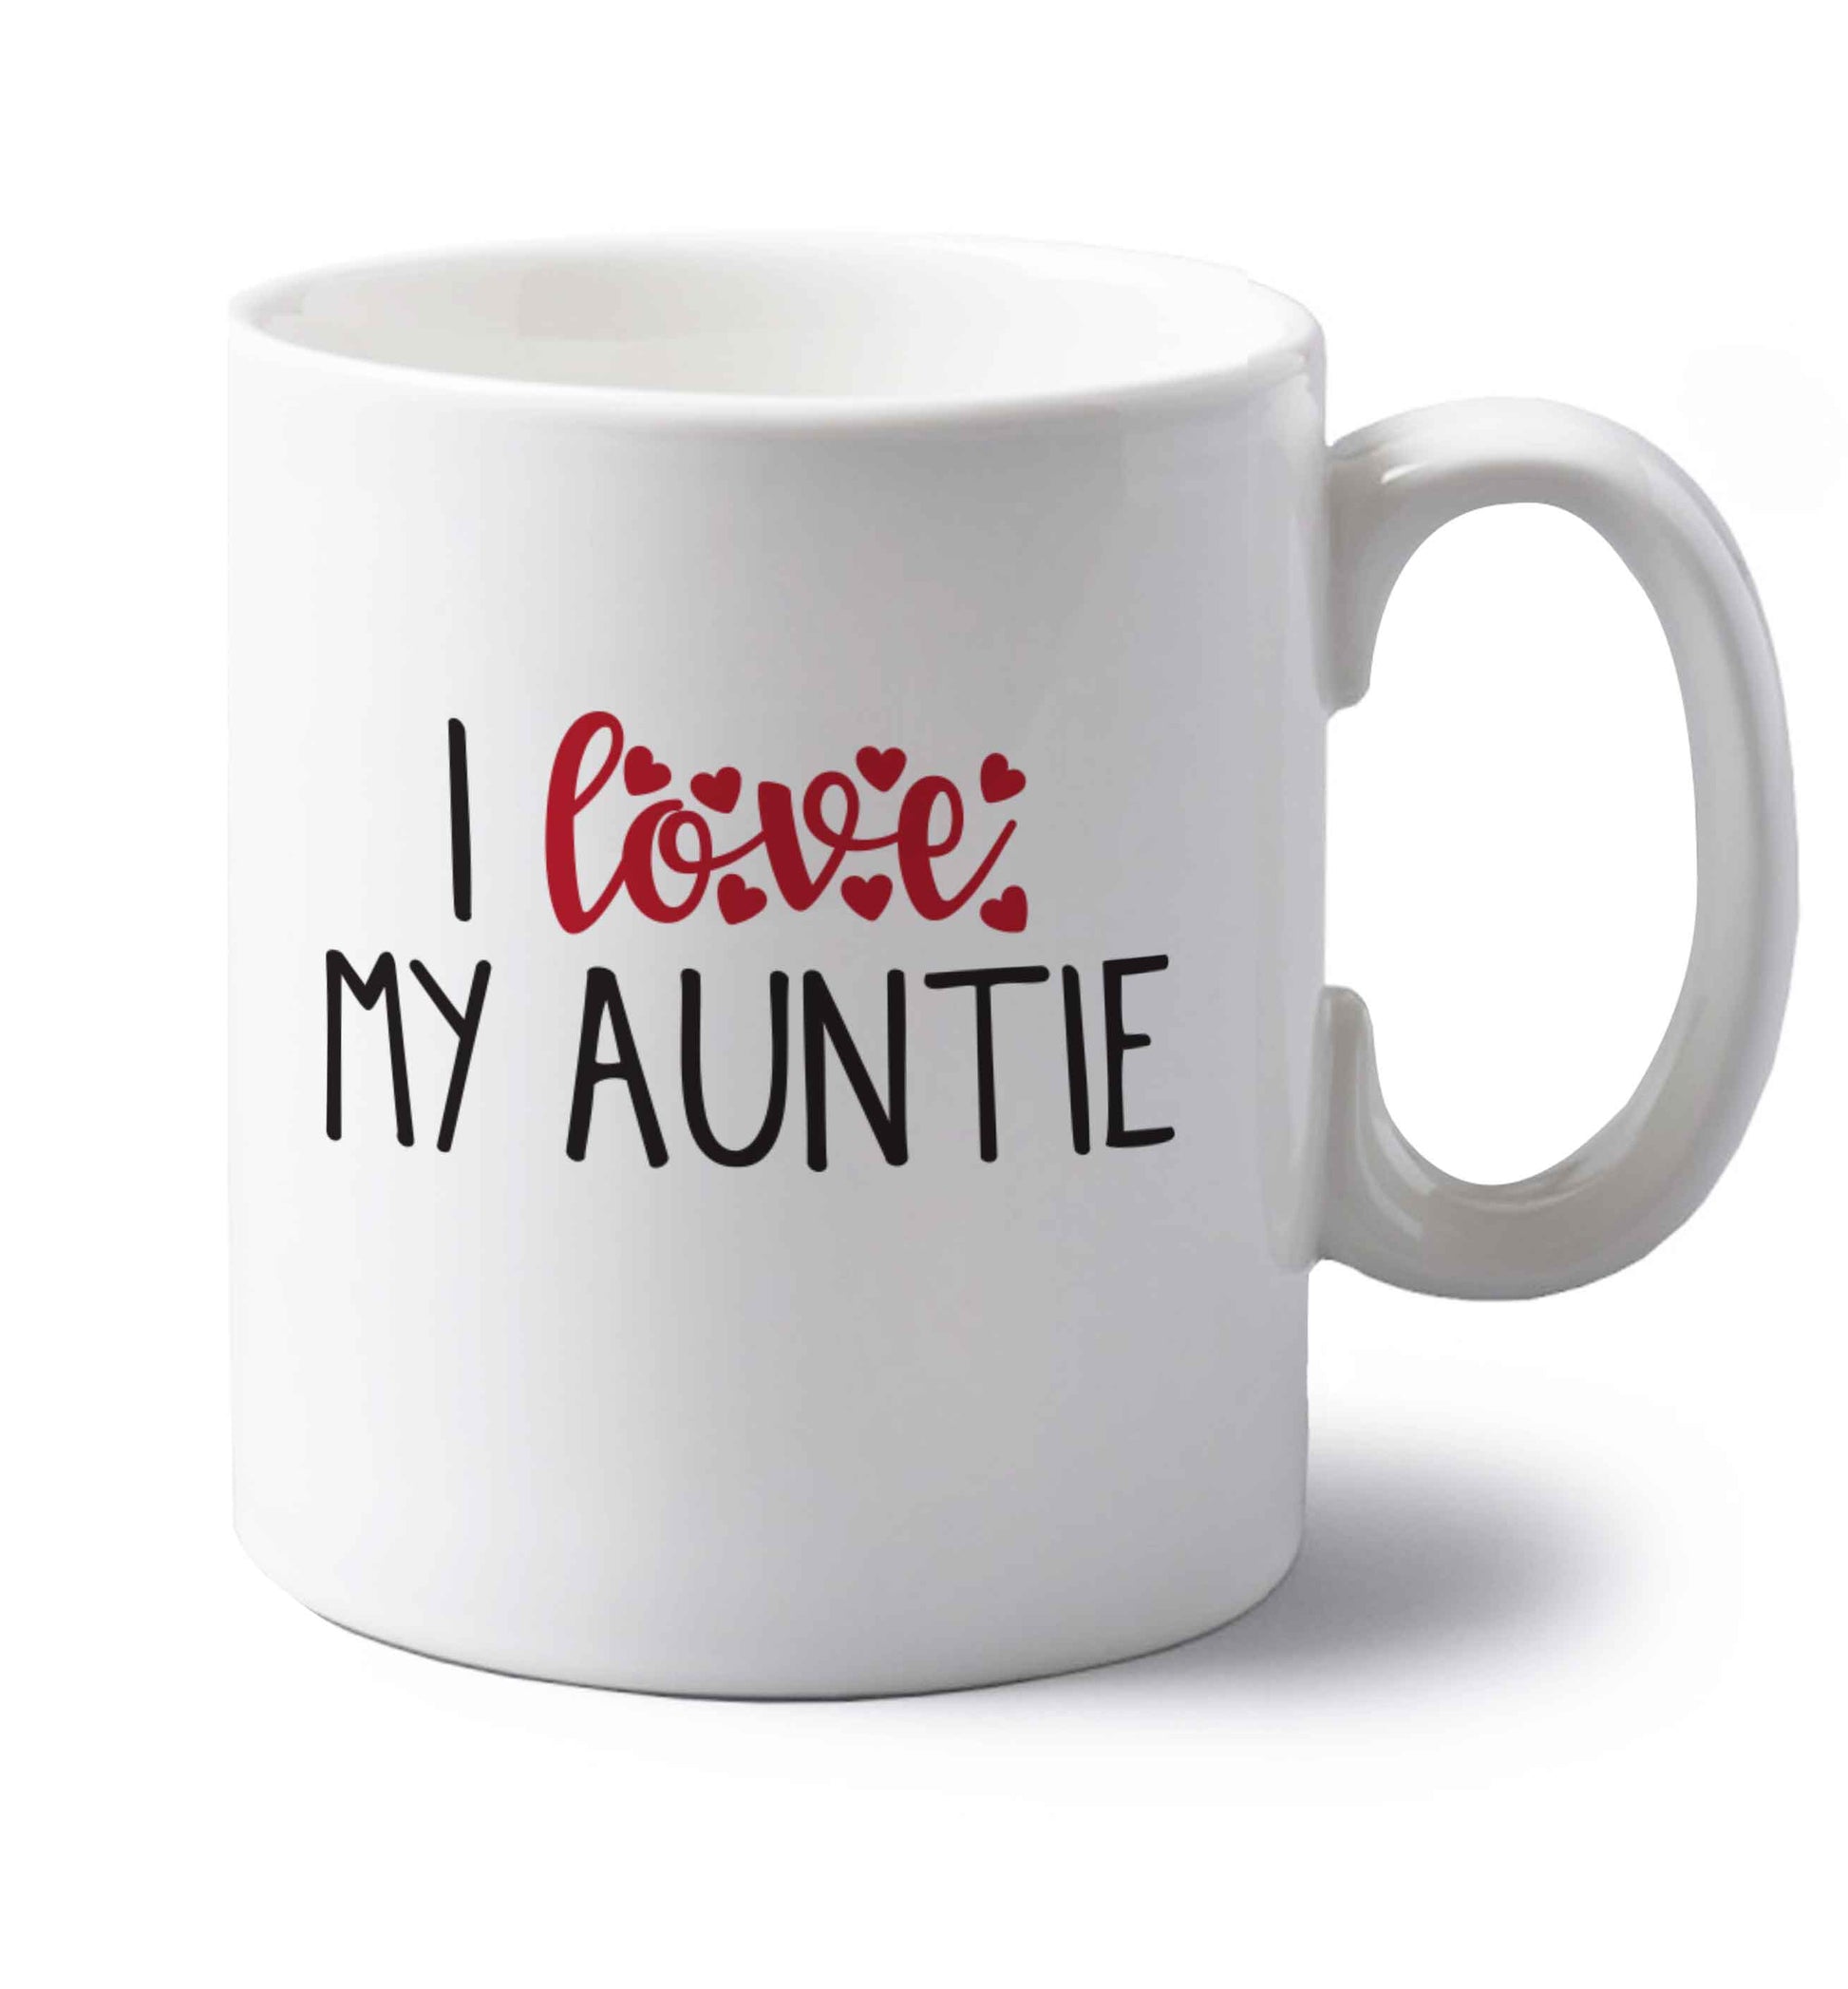 I love my auntie left handed white ceramic mug 